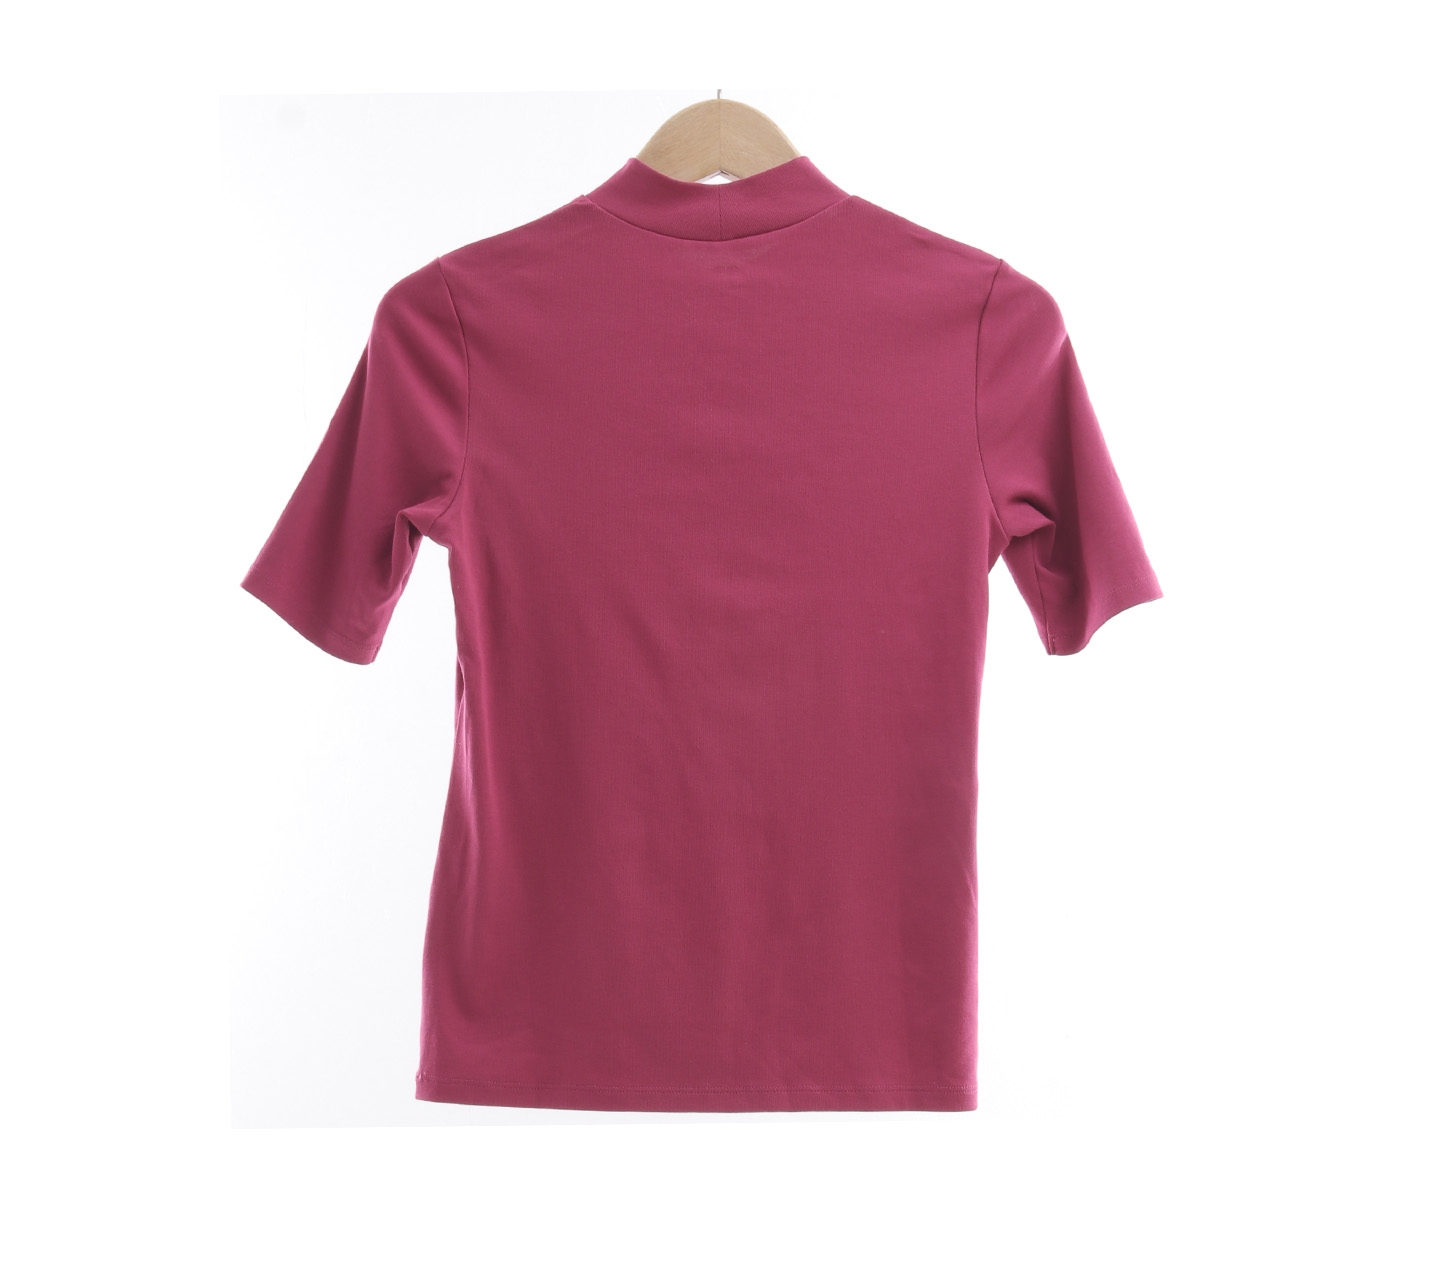 Uniqlo Purple T-Shirt